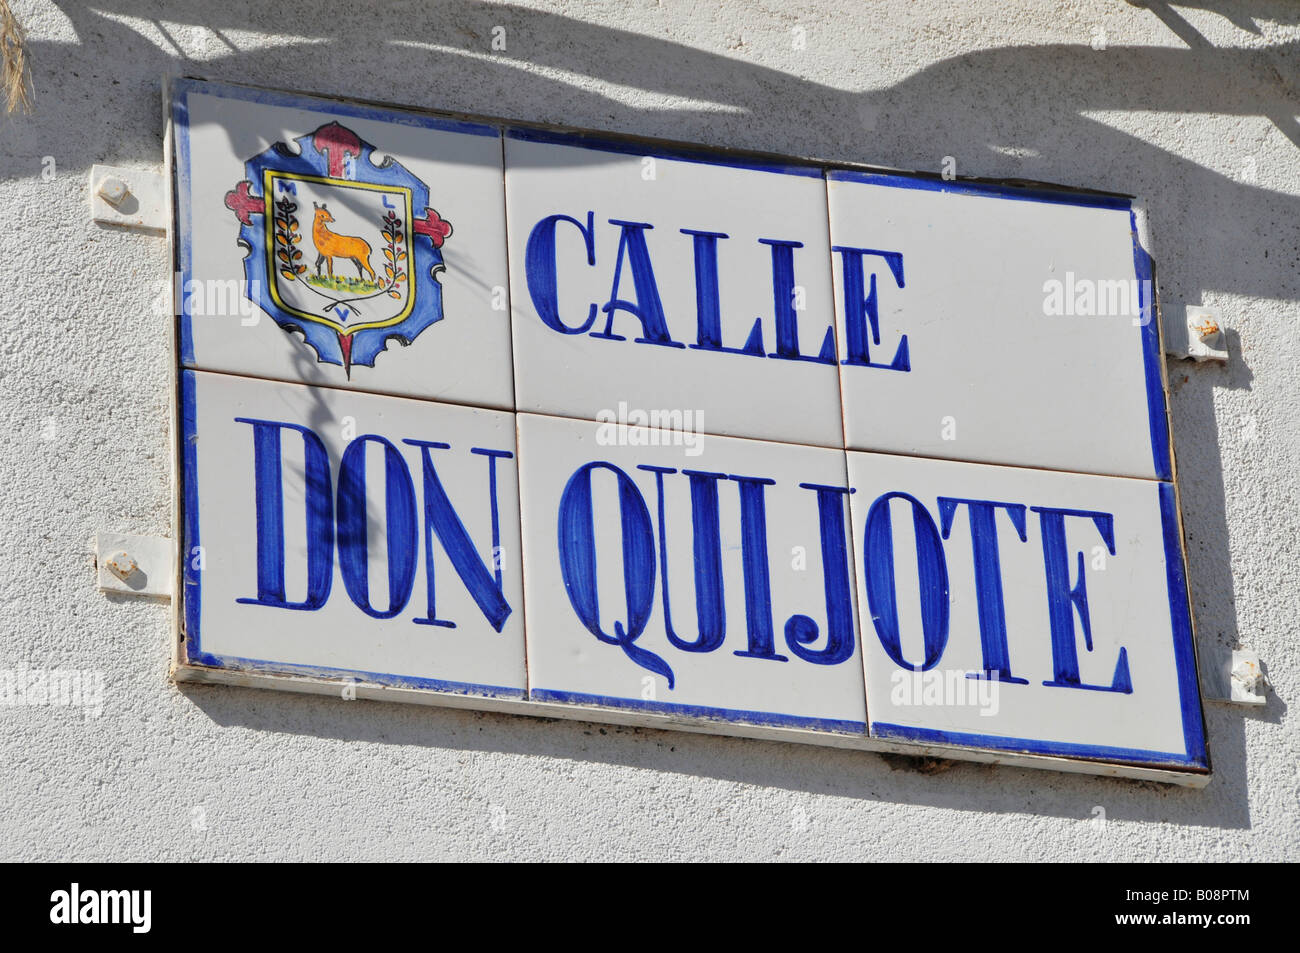 Tile street sign, Calle Don Quijote, Don Quixote Street, El Toboso, Castilla-La Mancha region, Spain Stock Photo